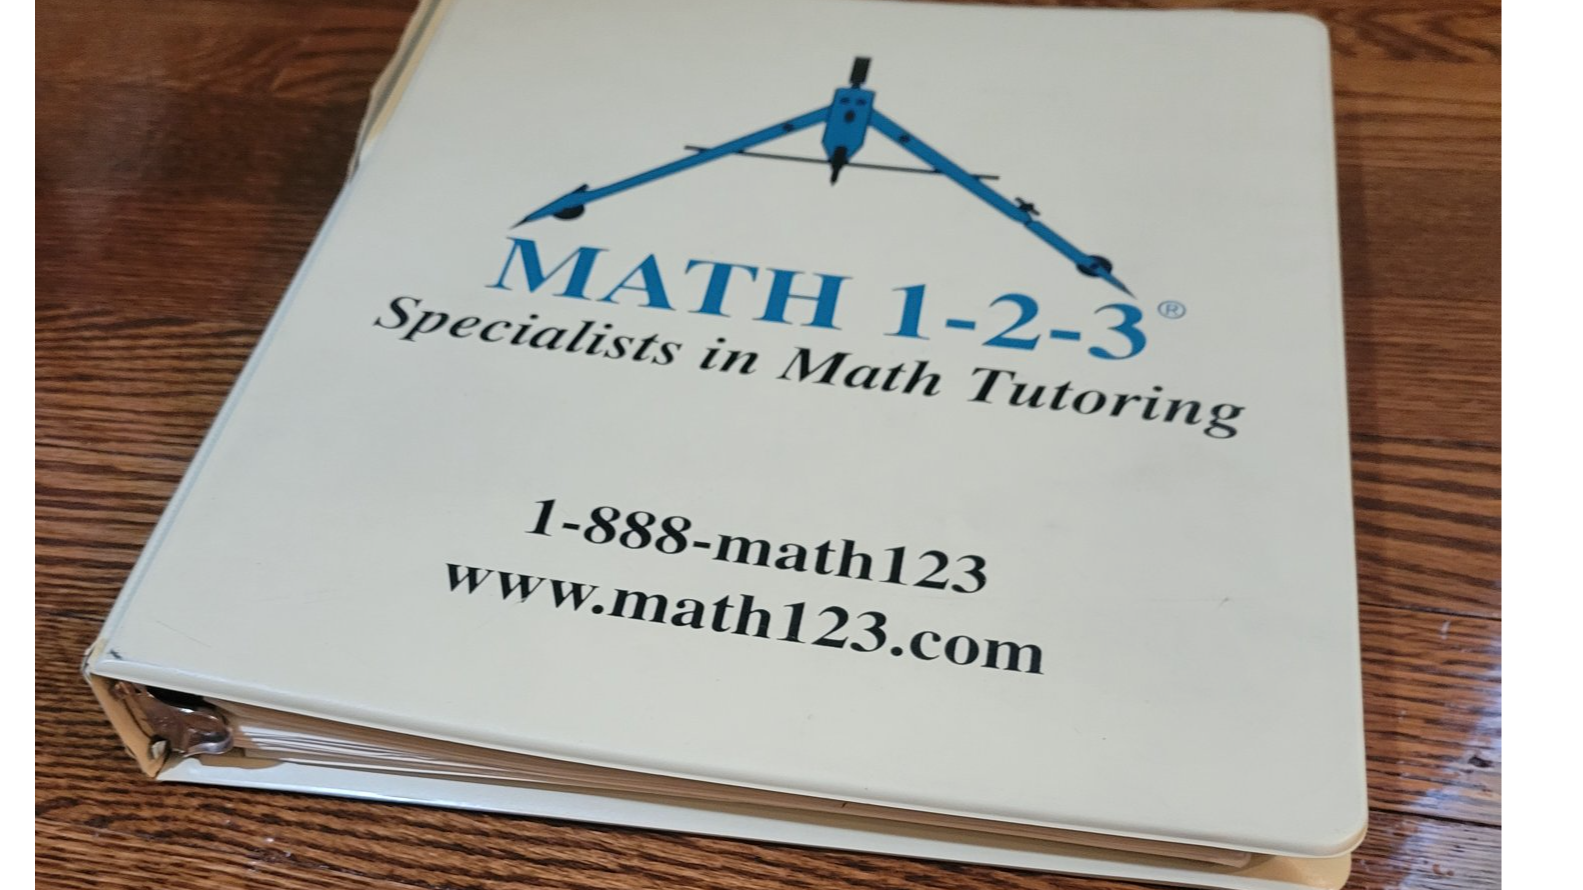 SAT & ACT Math Tutoring Pods & Virtual Classes Help Students Preparing For STEM